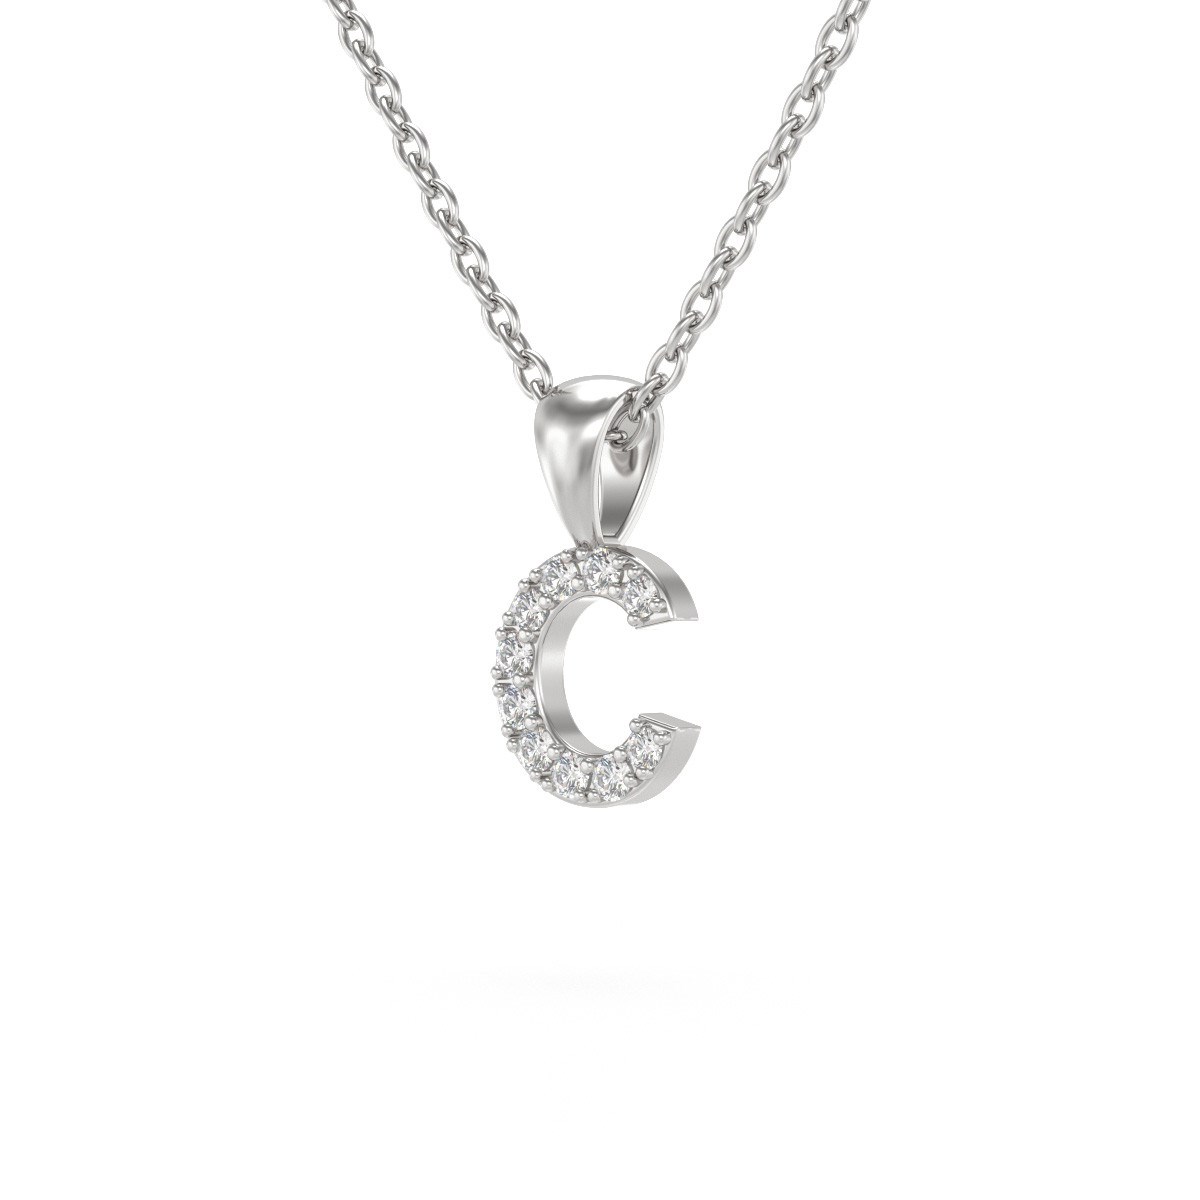 Collier Pendentif ADEN Lettre C Or 750 Blanc Diamant Chaine Or 750 incluse 0.72grs - vue 3